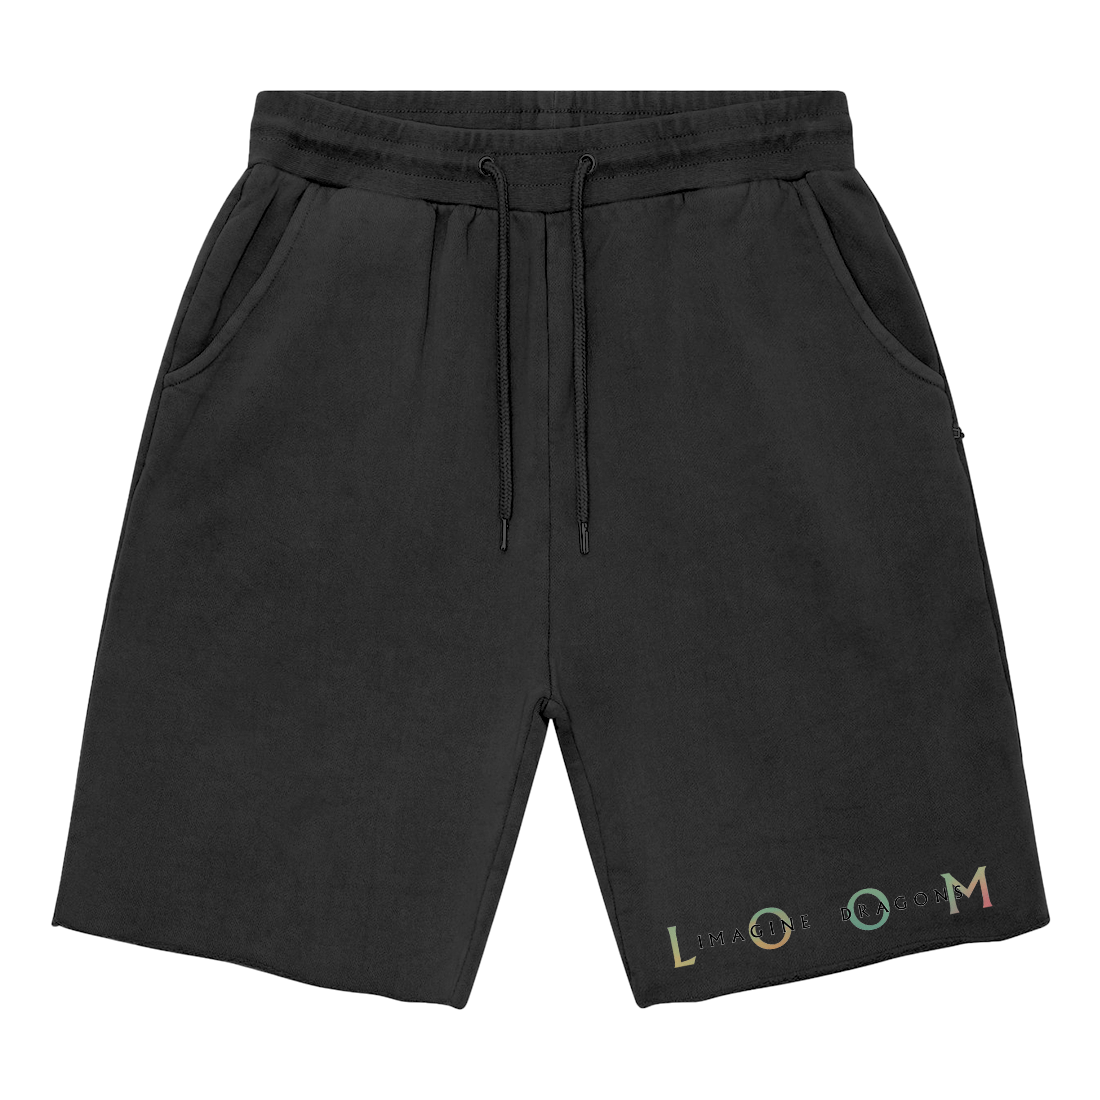 Imagine Dragons - LOOM Shorts